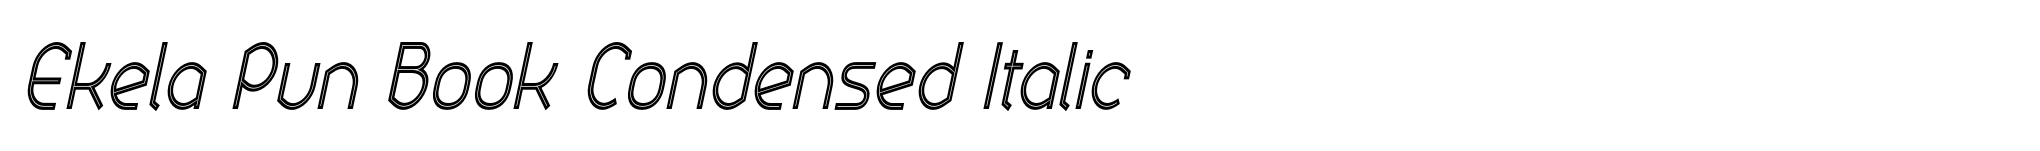 Ekela Pun Book Condensed Italic image